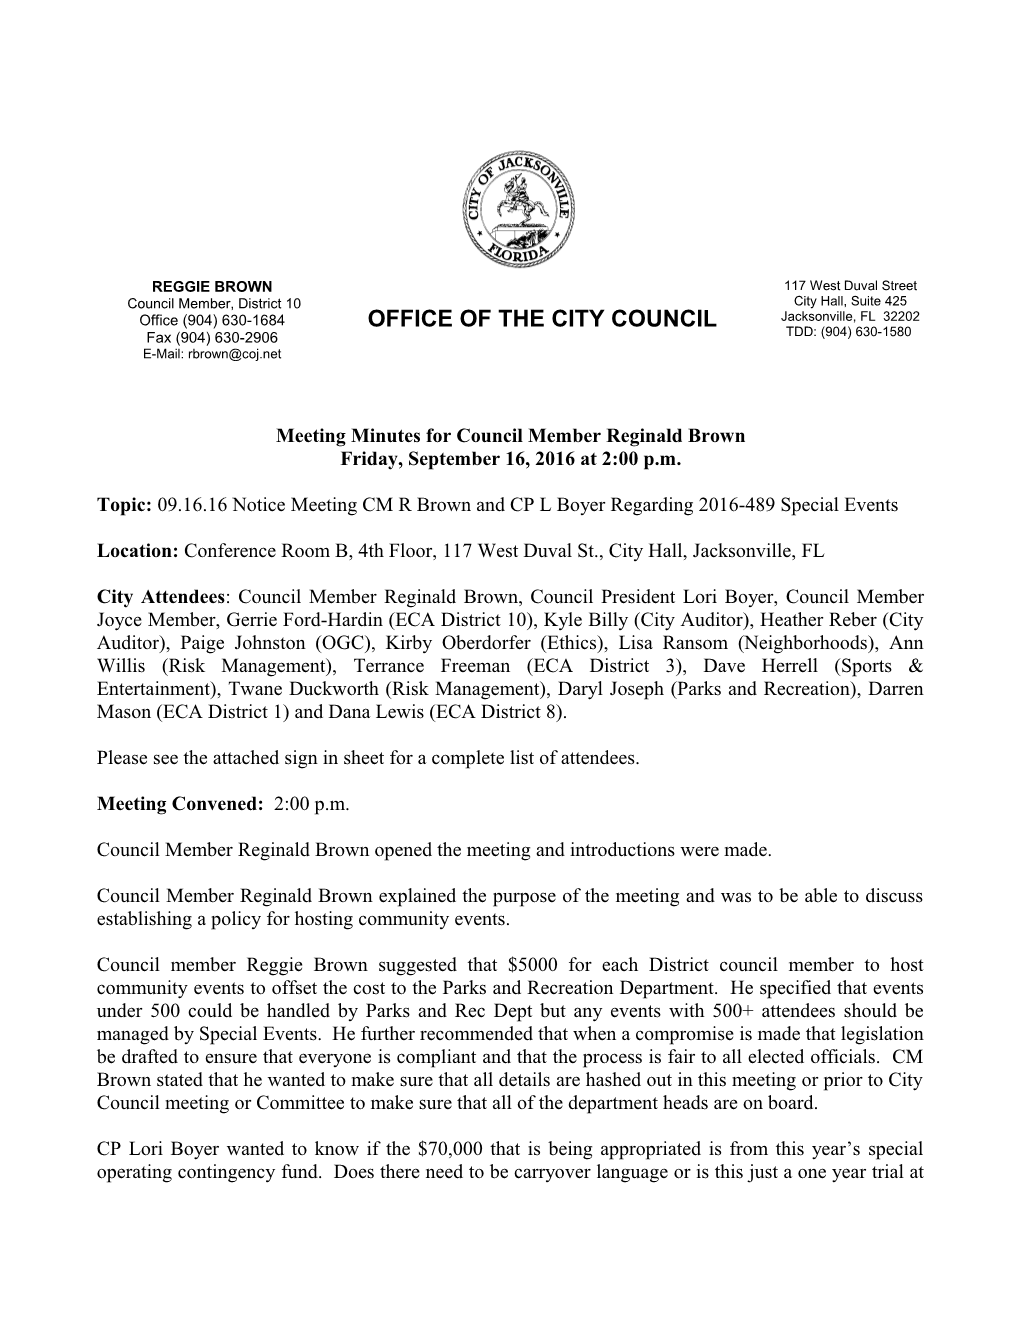 Meeting Minutes for Council Member Reginald Brown